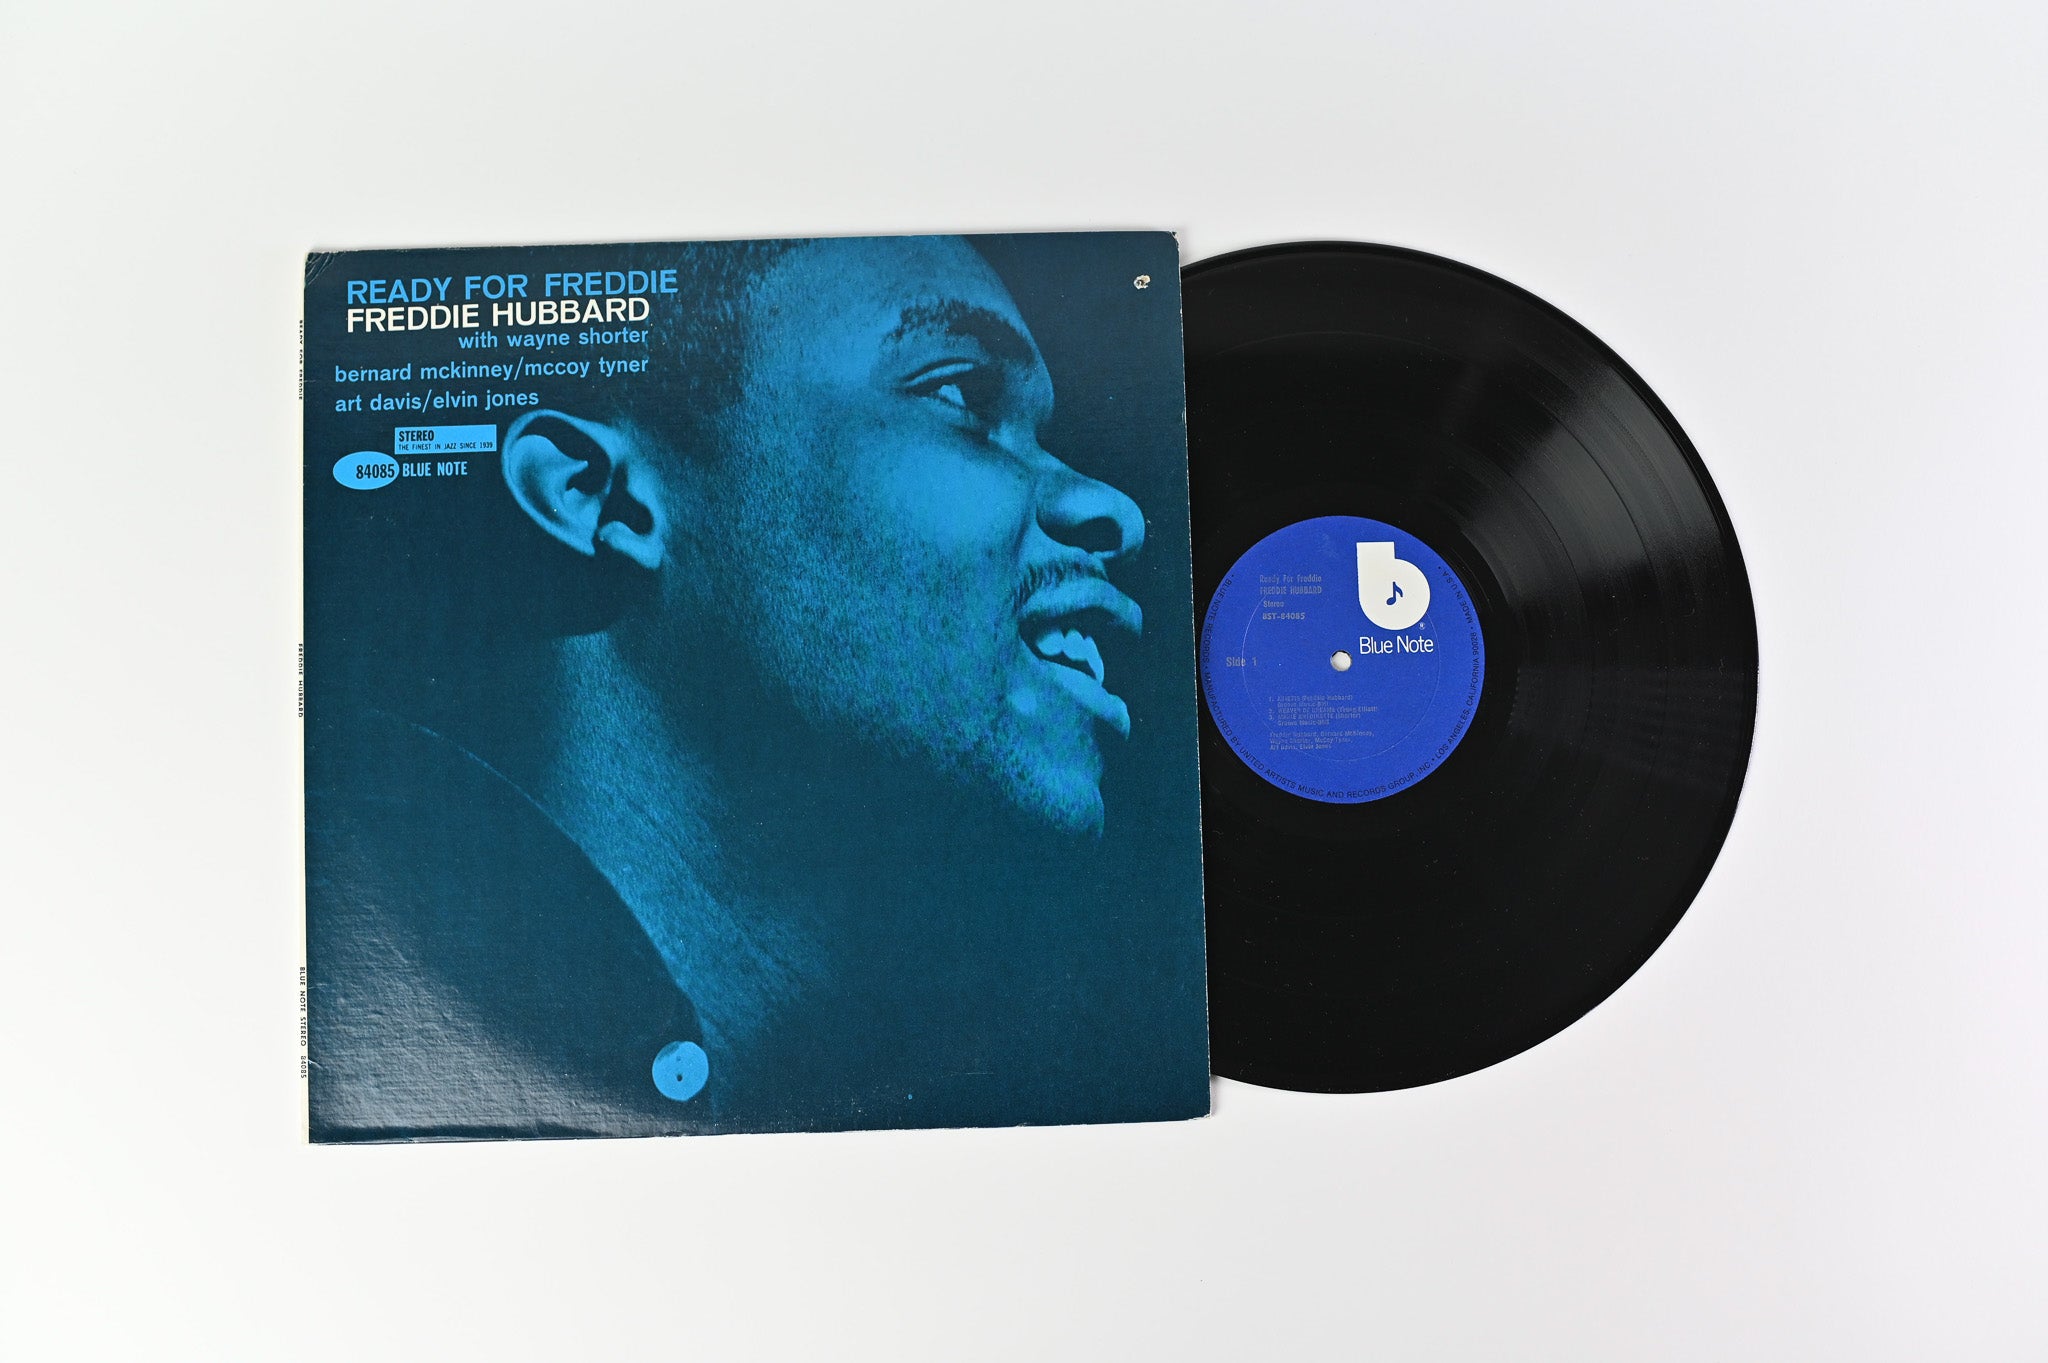 Freddie Hubbard - Ready For Freddie on Blue Note 1977 Reissue